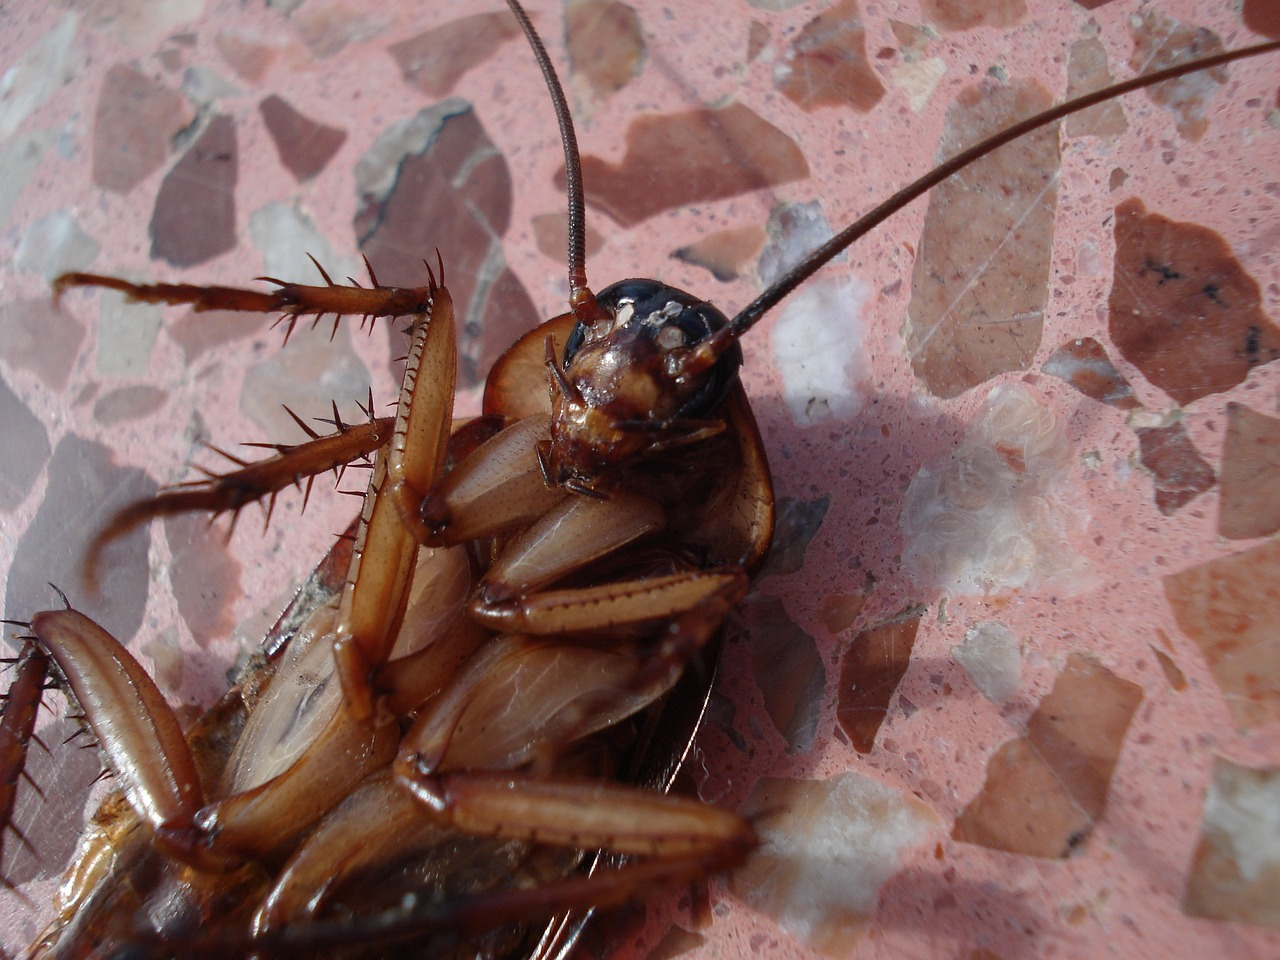 An image of a cockroach on an indoor floor.